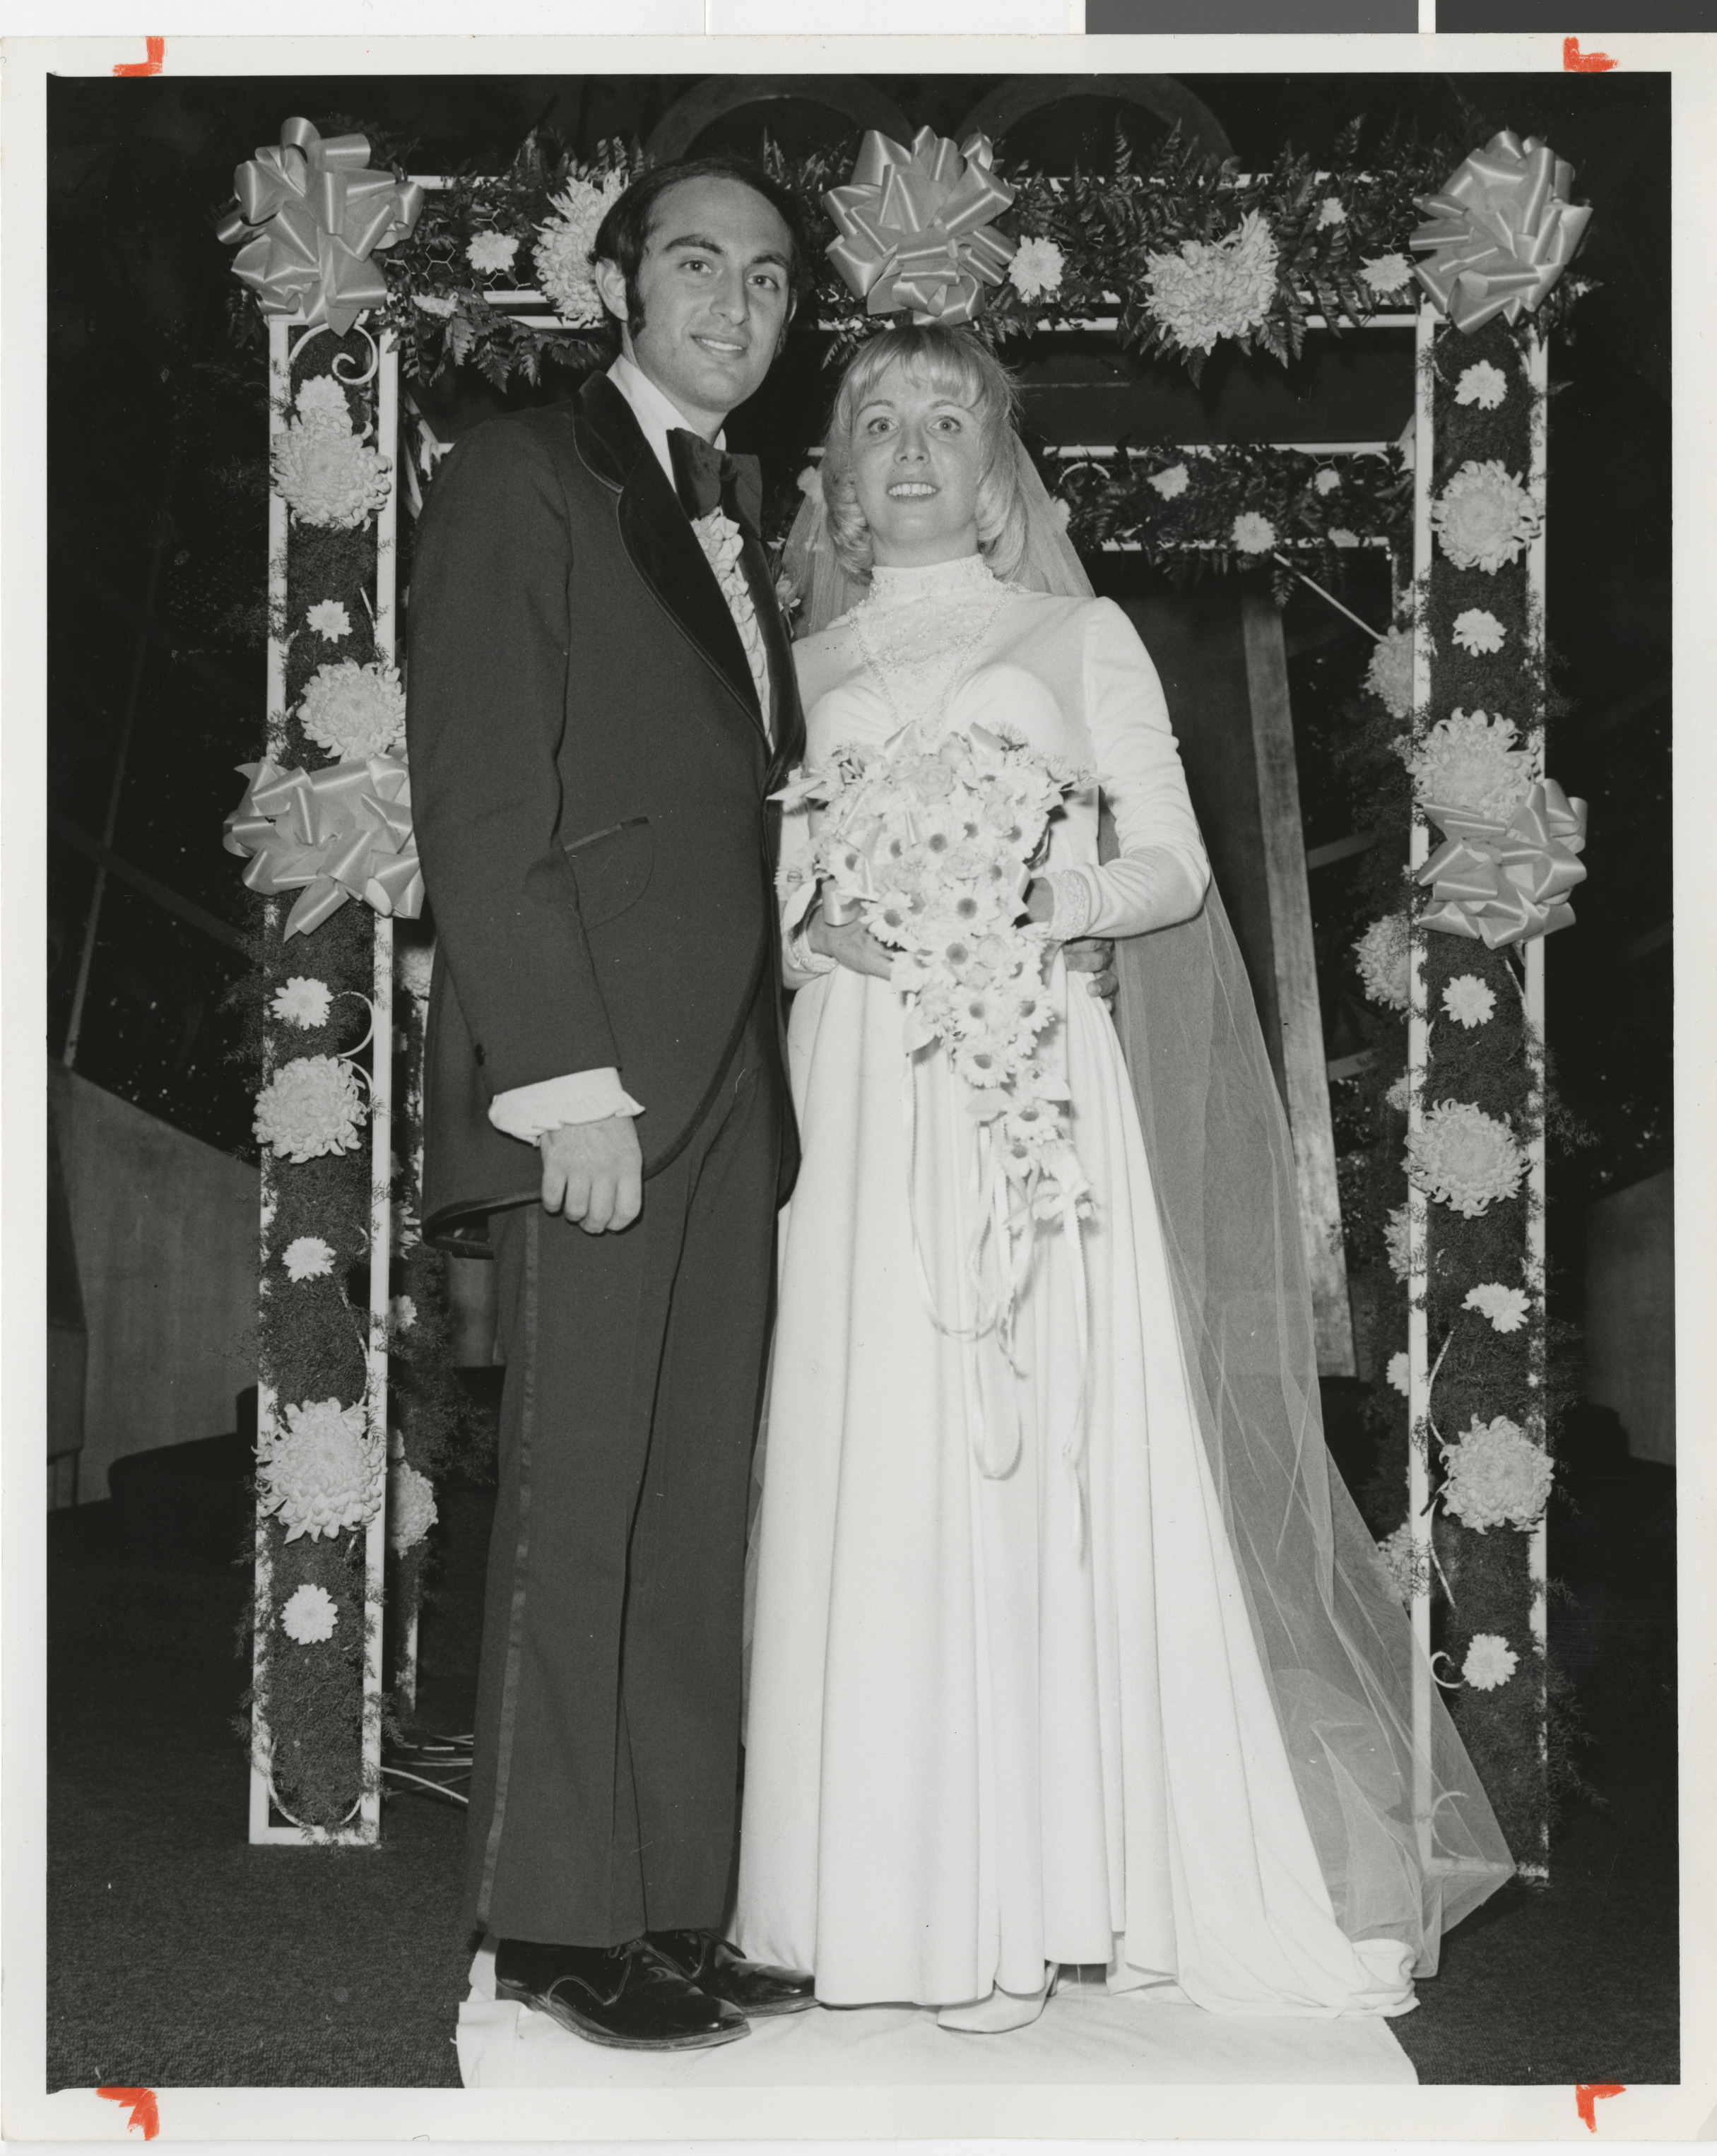 Wedding portrait of Hilary Hammes and David Bloom, 1970s